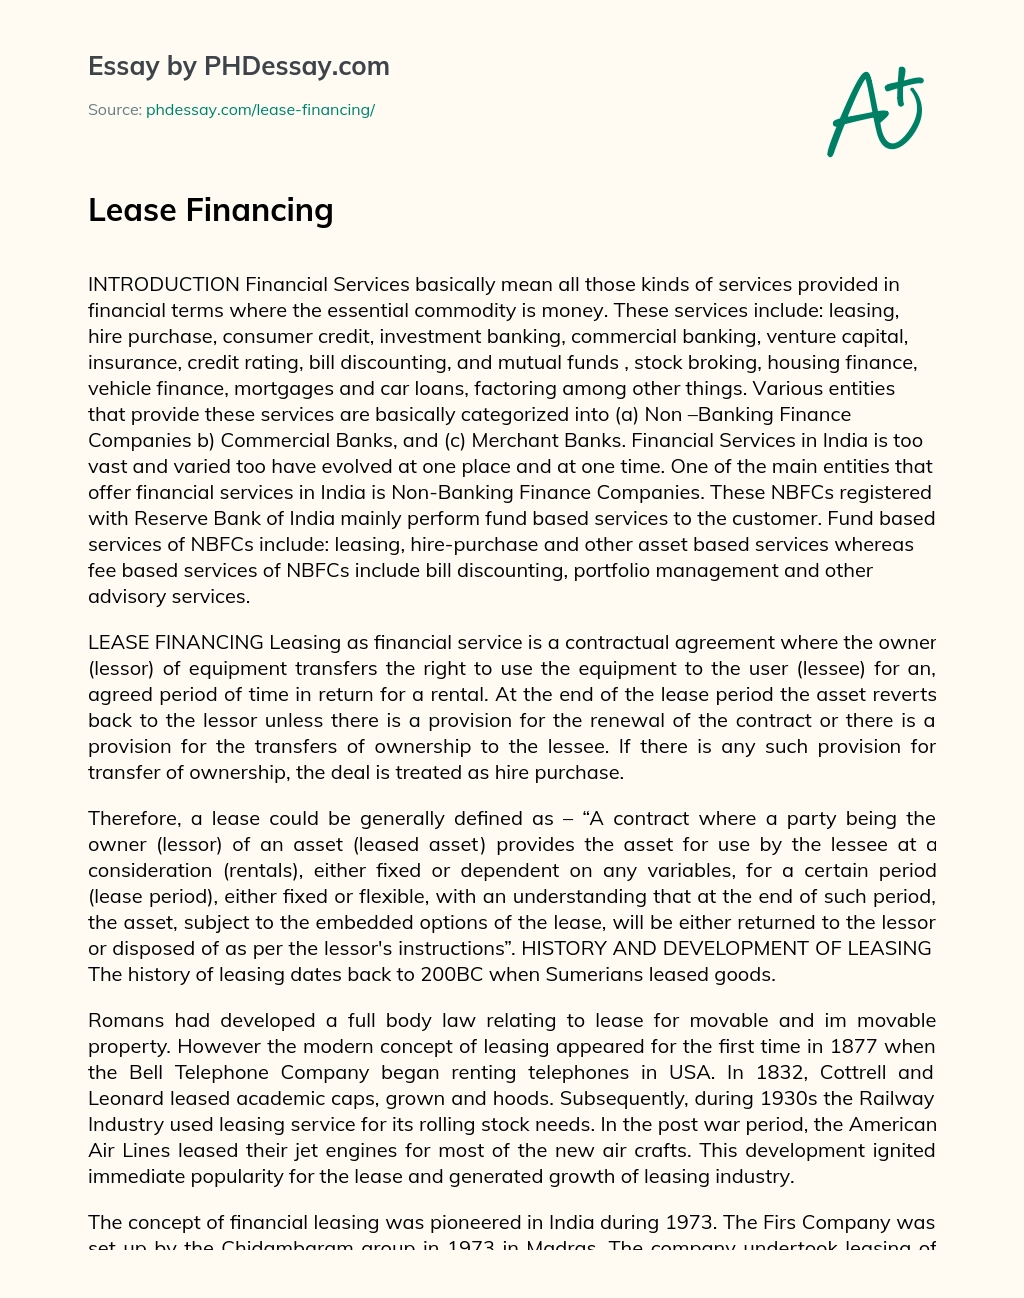 Lease Financing essay